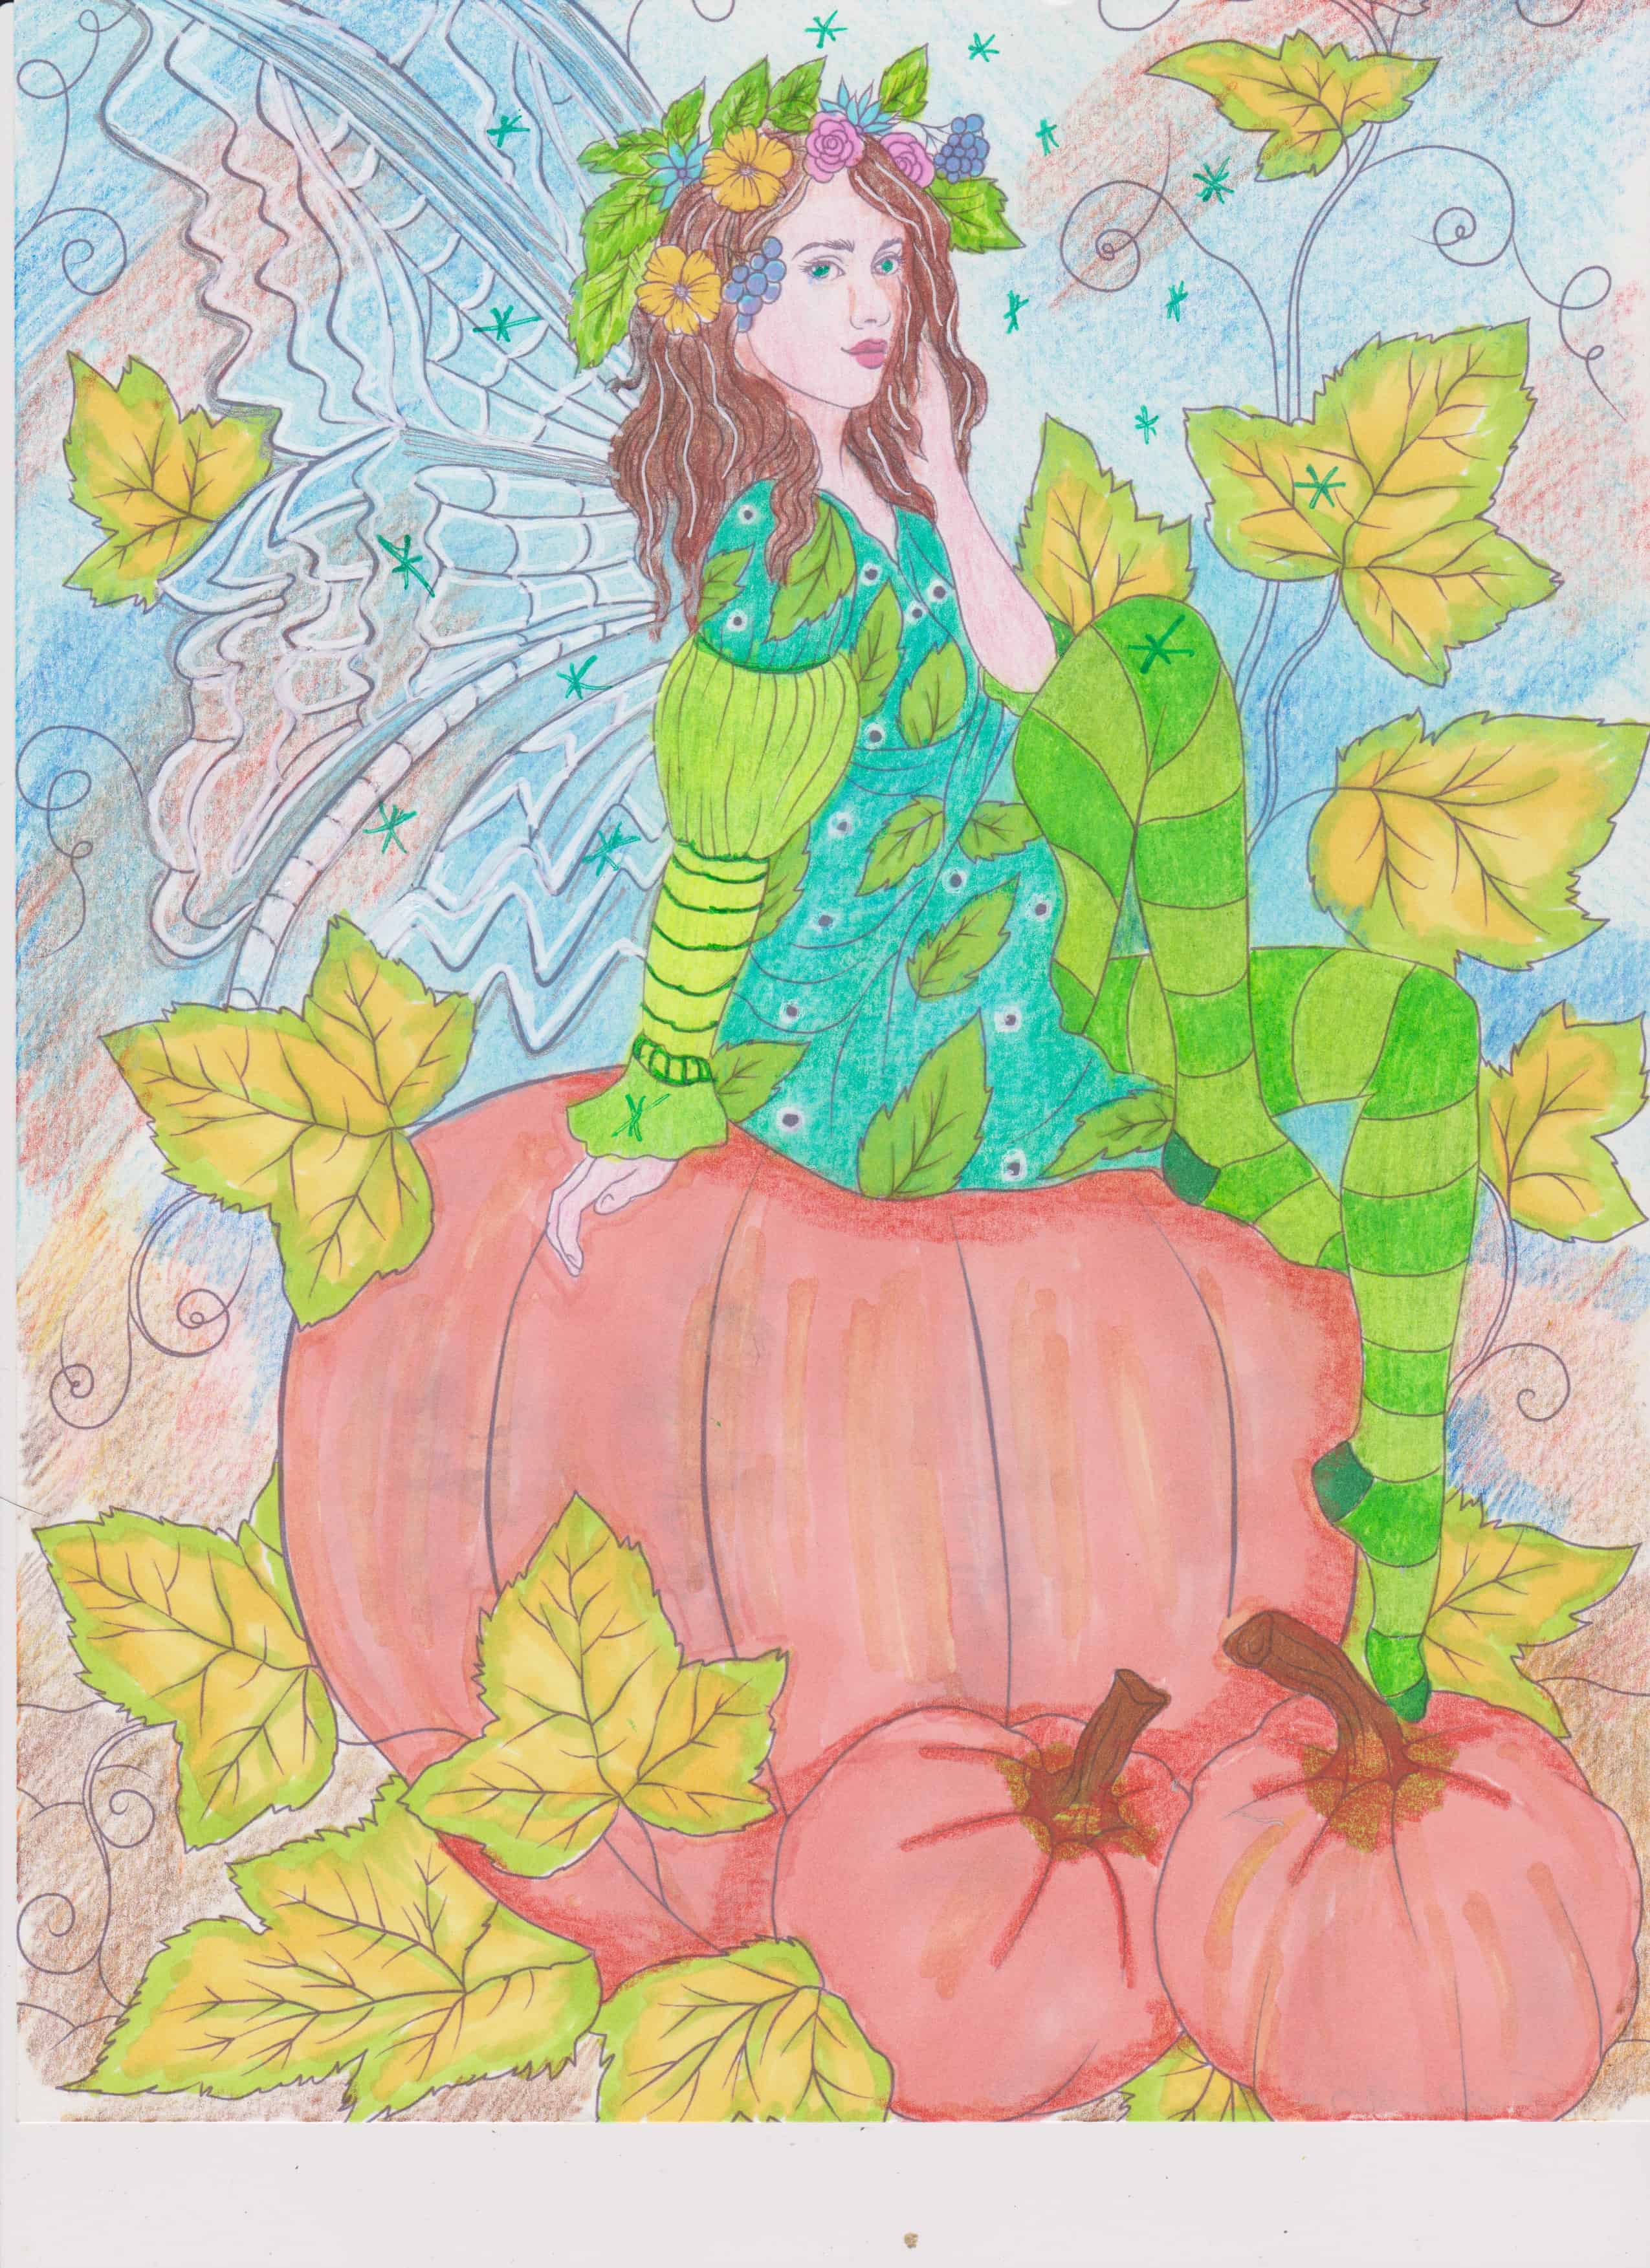 Fairy and Pumpkin